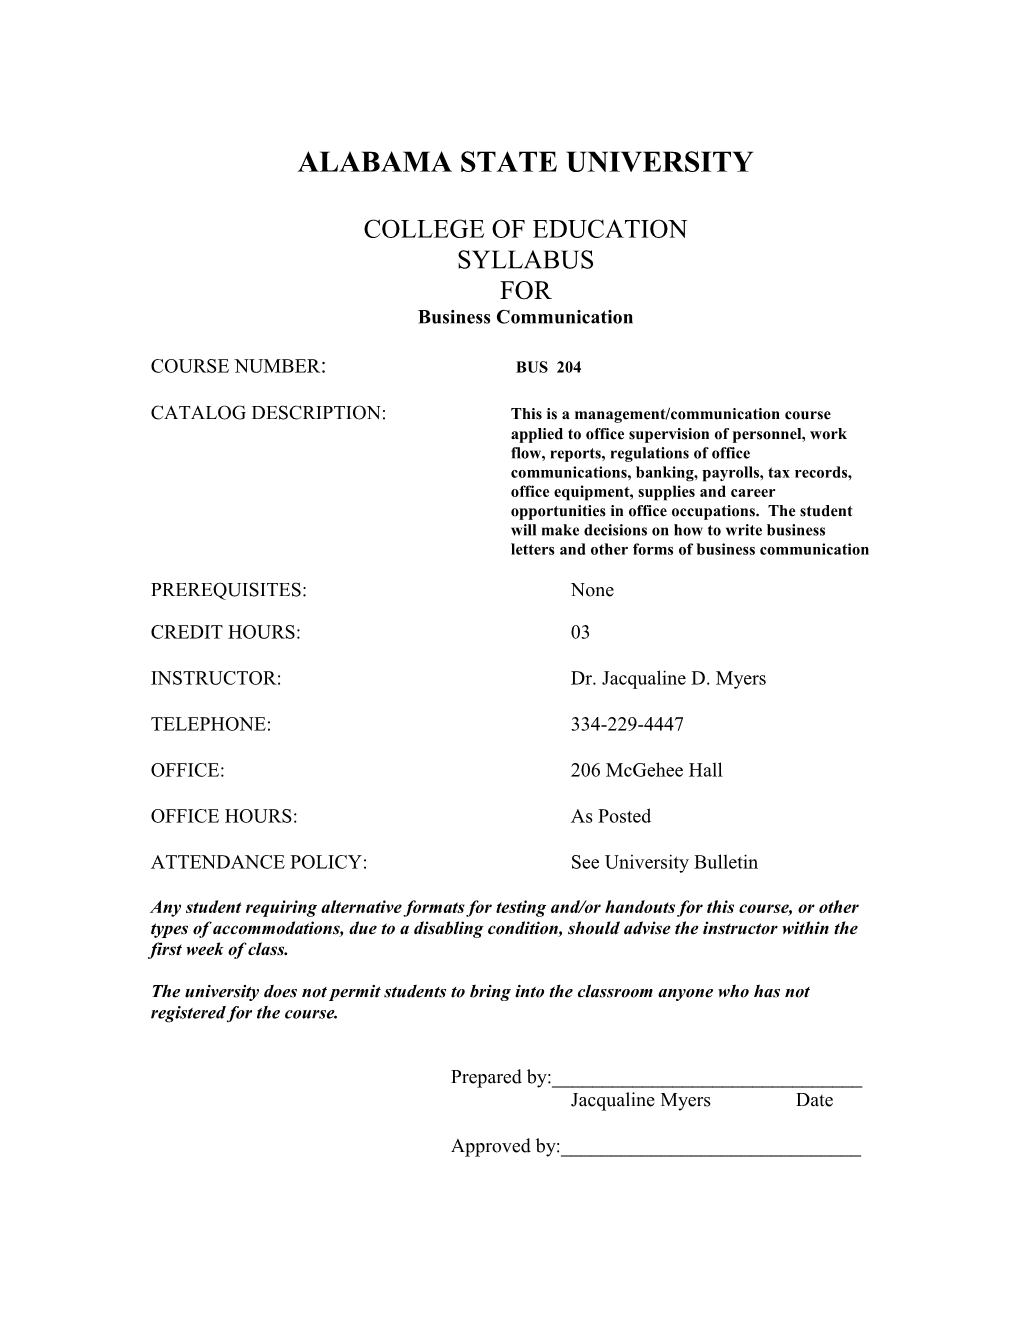 Alabama State University s1